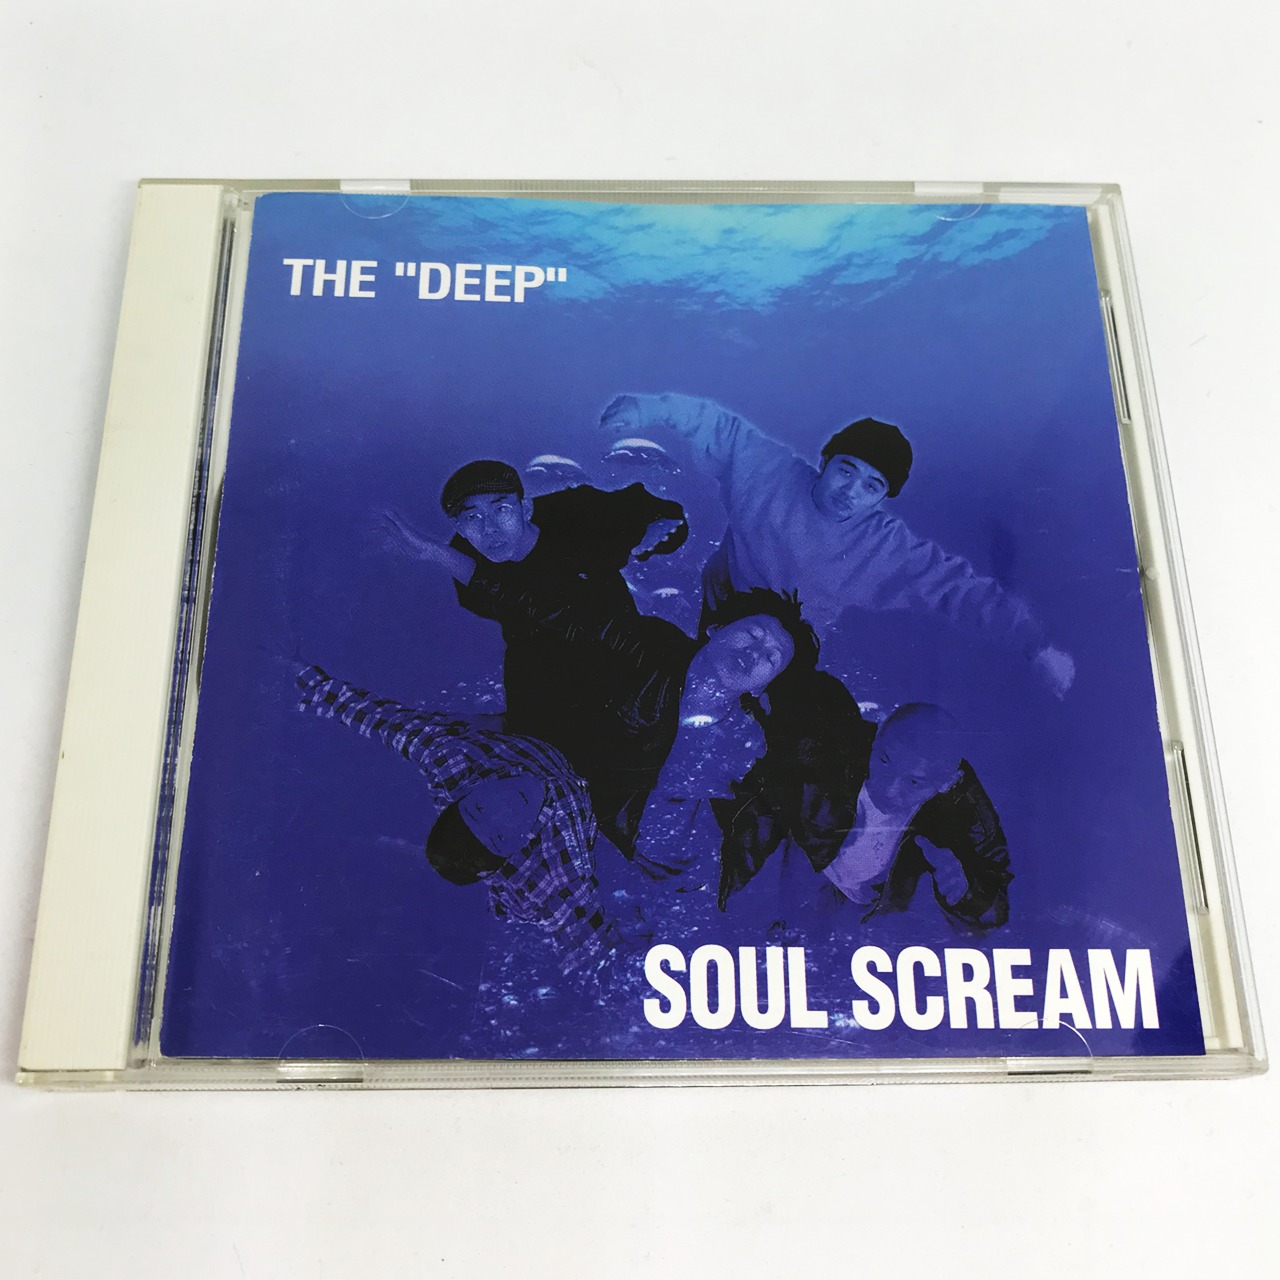 SOUL SCREAM / THE "DEEP"